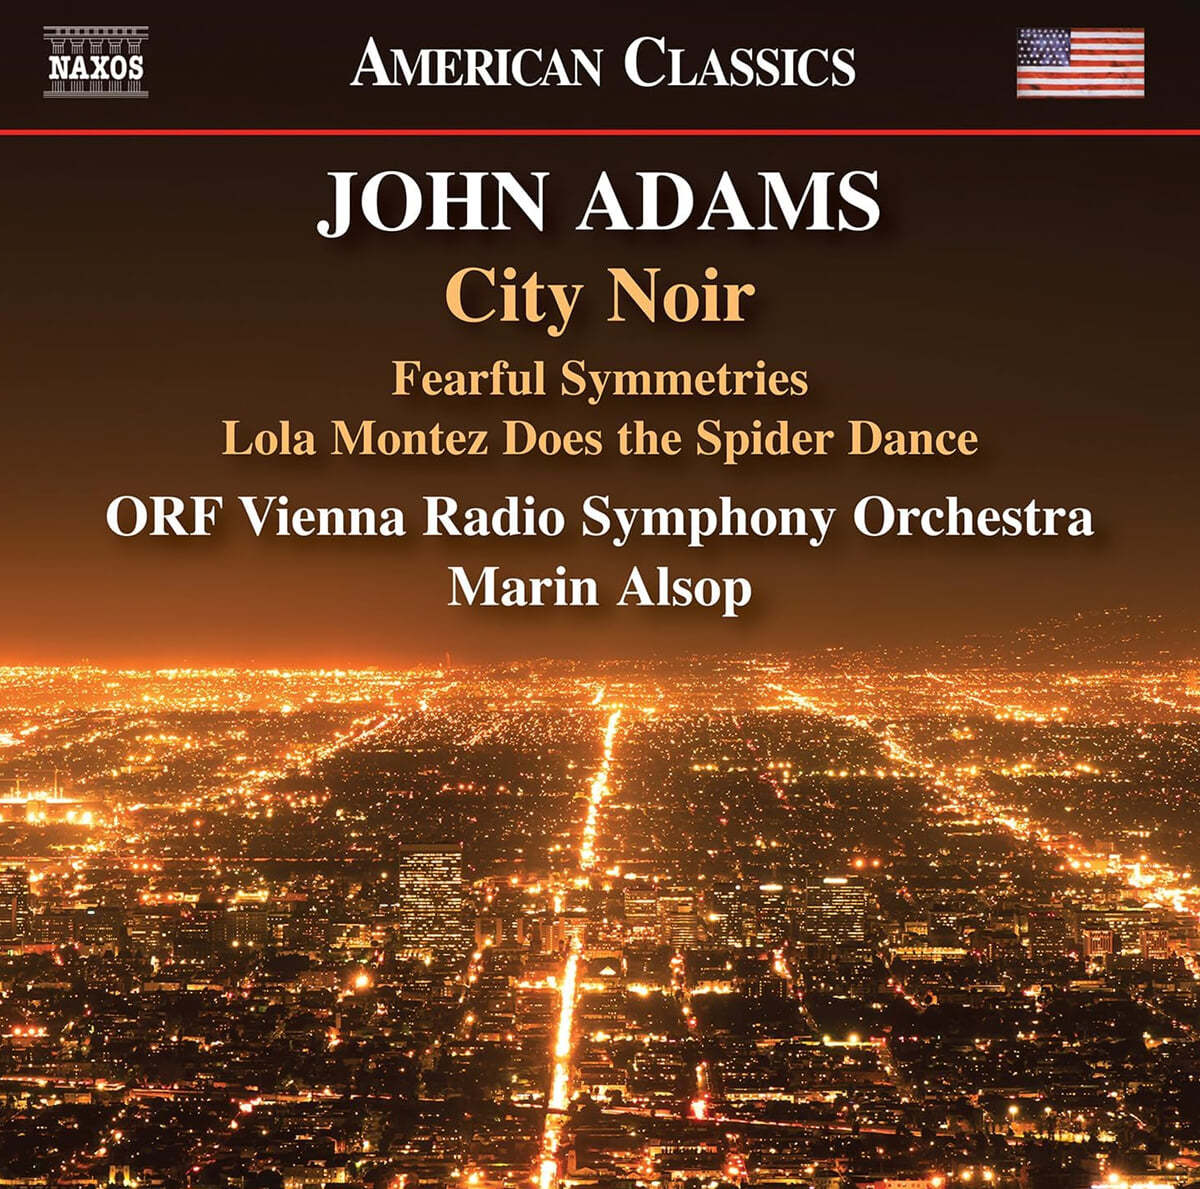 Marin Alsop 존 애덤스: ‘시티 느와르’, ‘공포스러운 대칭들’, ‘황금 서부의 아가씨&#39; 중 롤라 몬테즈는 거미춤을 춘다’  (Adams: City Noir, Fearful Symmetries)